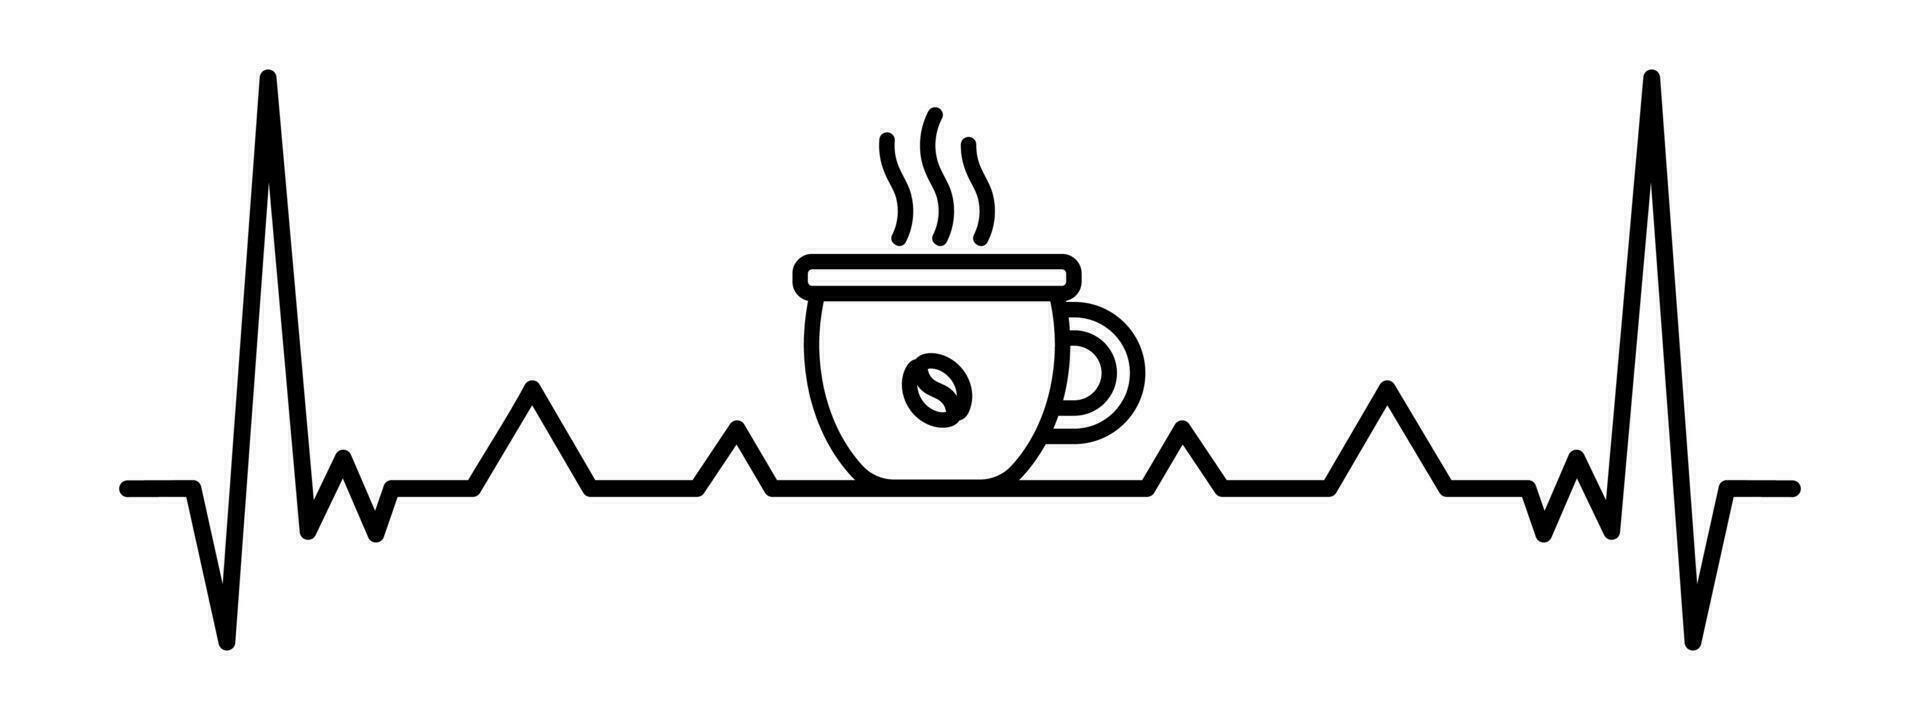 café latido del corazón, vector ilustración de cardiograma con café taza forma.